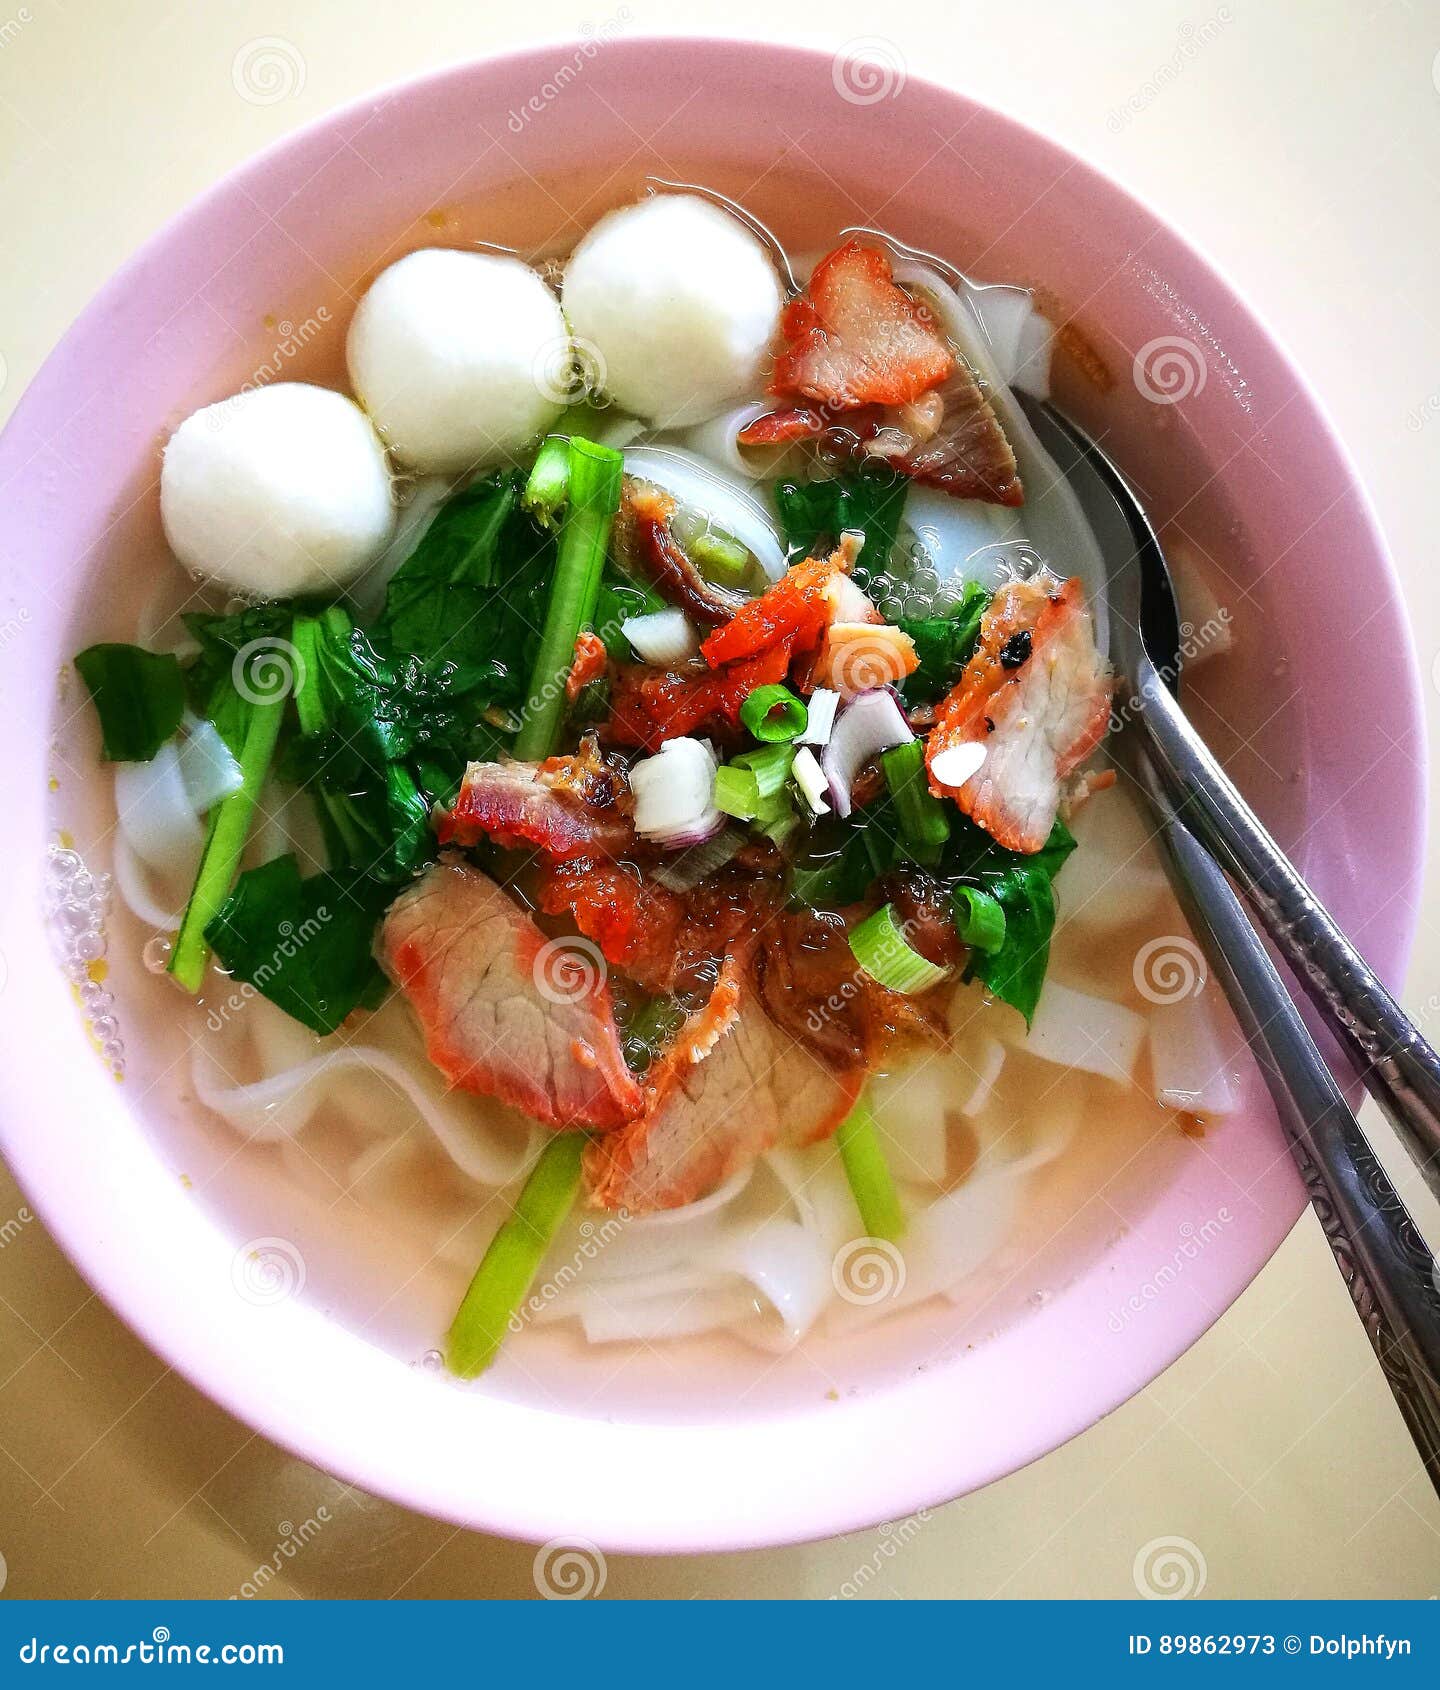 a bowl of kueh tiao soup